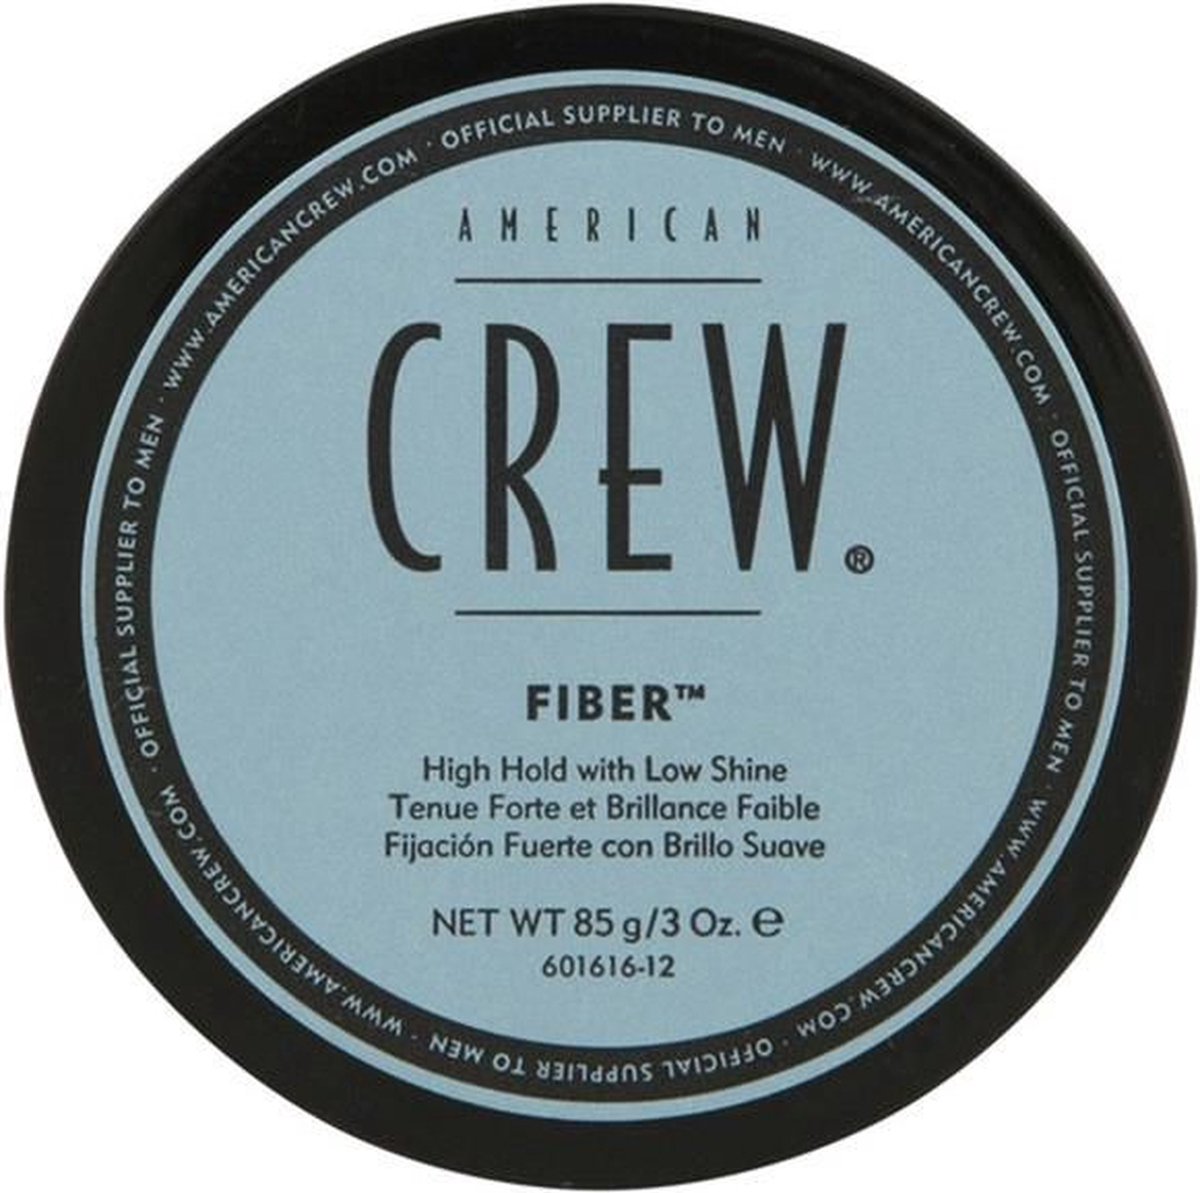 American crew Fiber - 12 x 85 ml